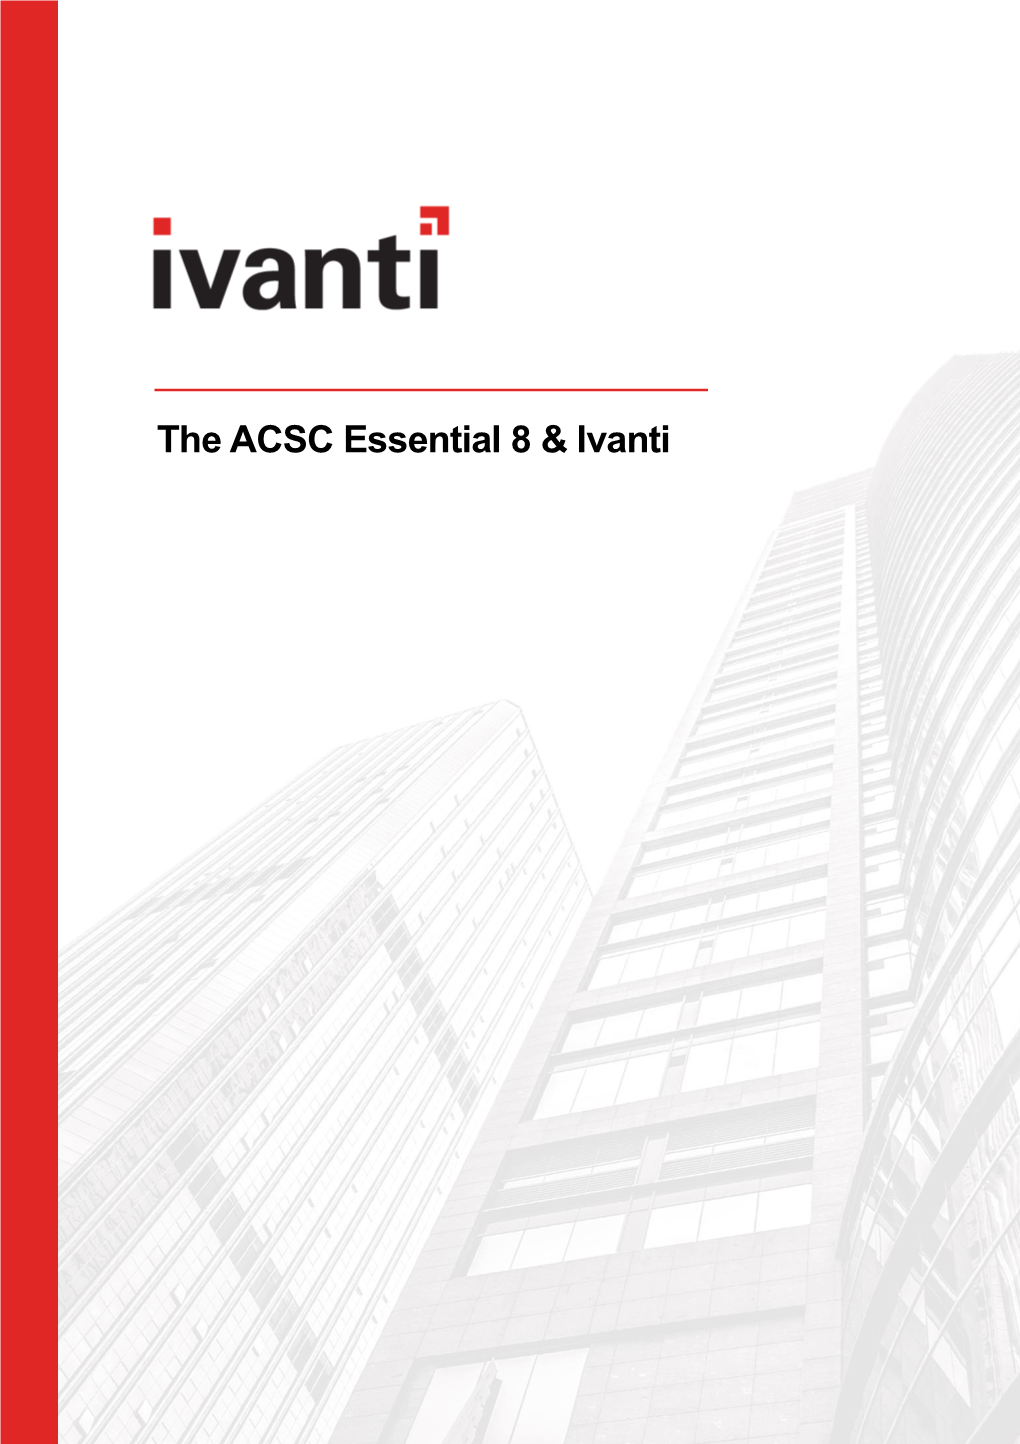 The ACSC Essential 8 & Ivanti